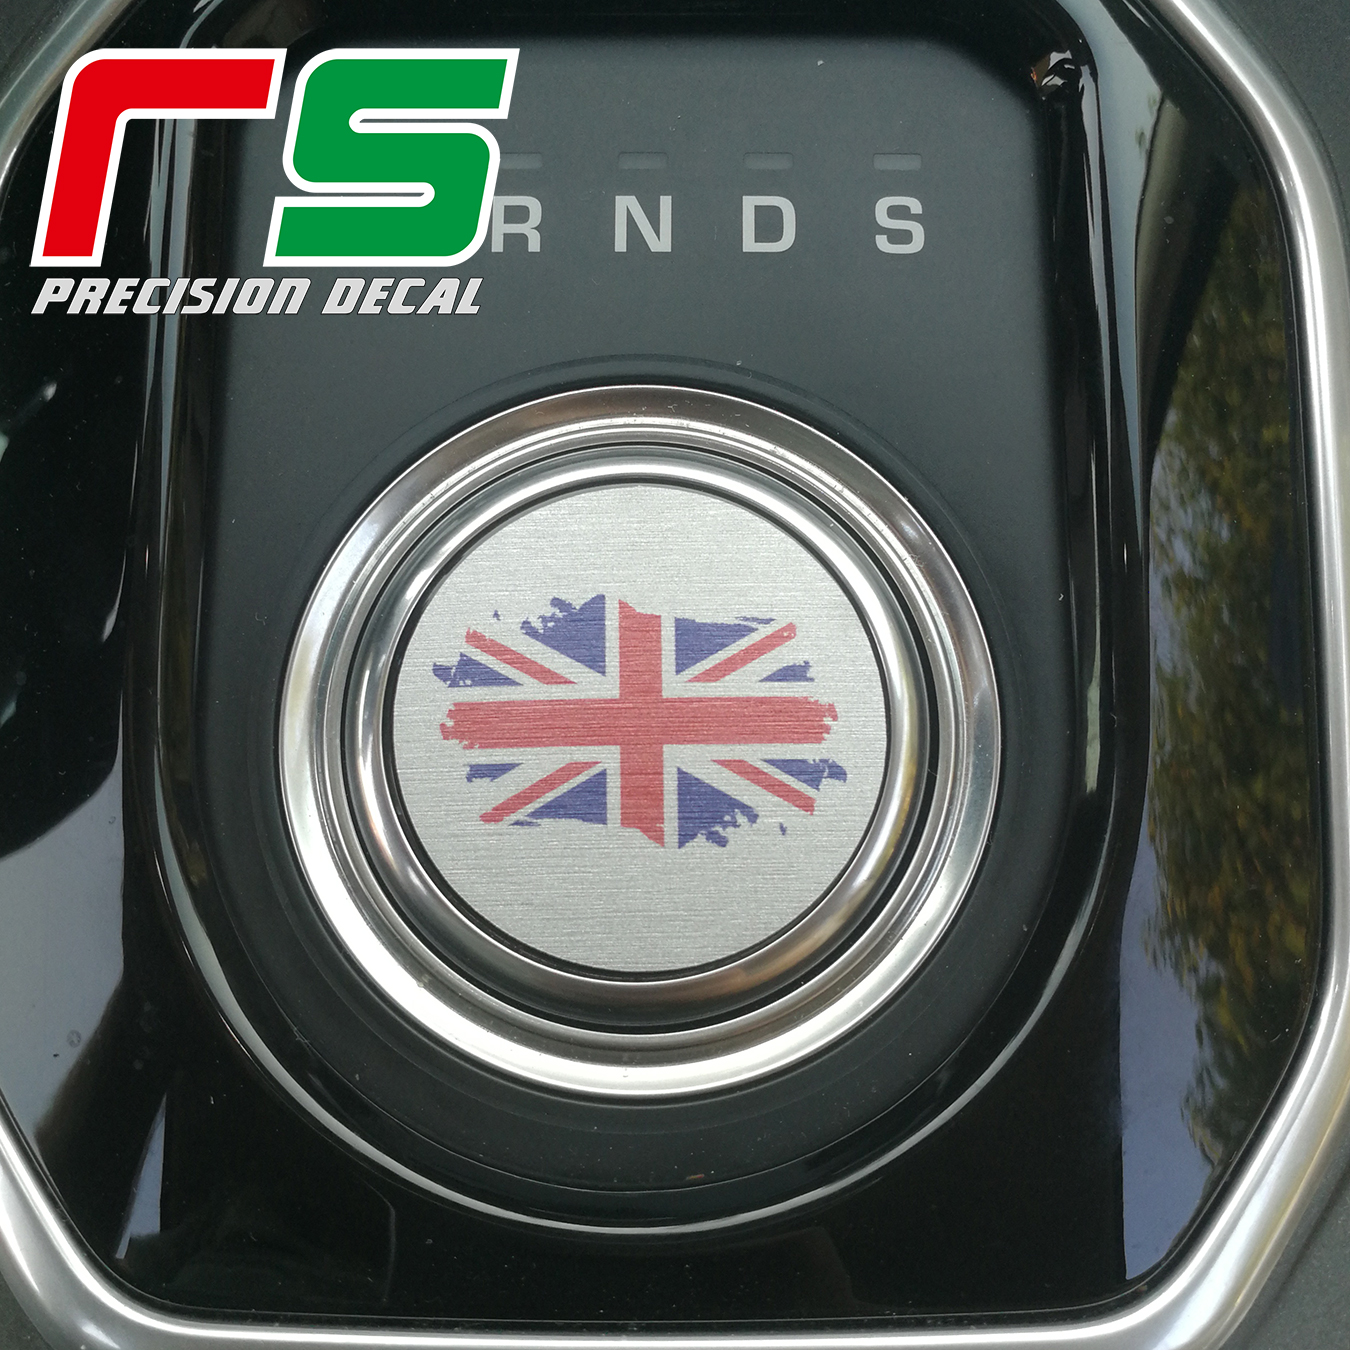 Gear Shift Knob Decals Custom Fit For Range Rover Evoque 2011 2012